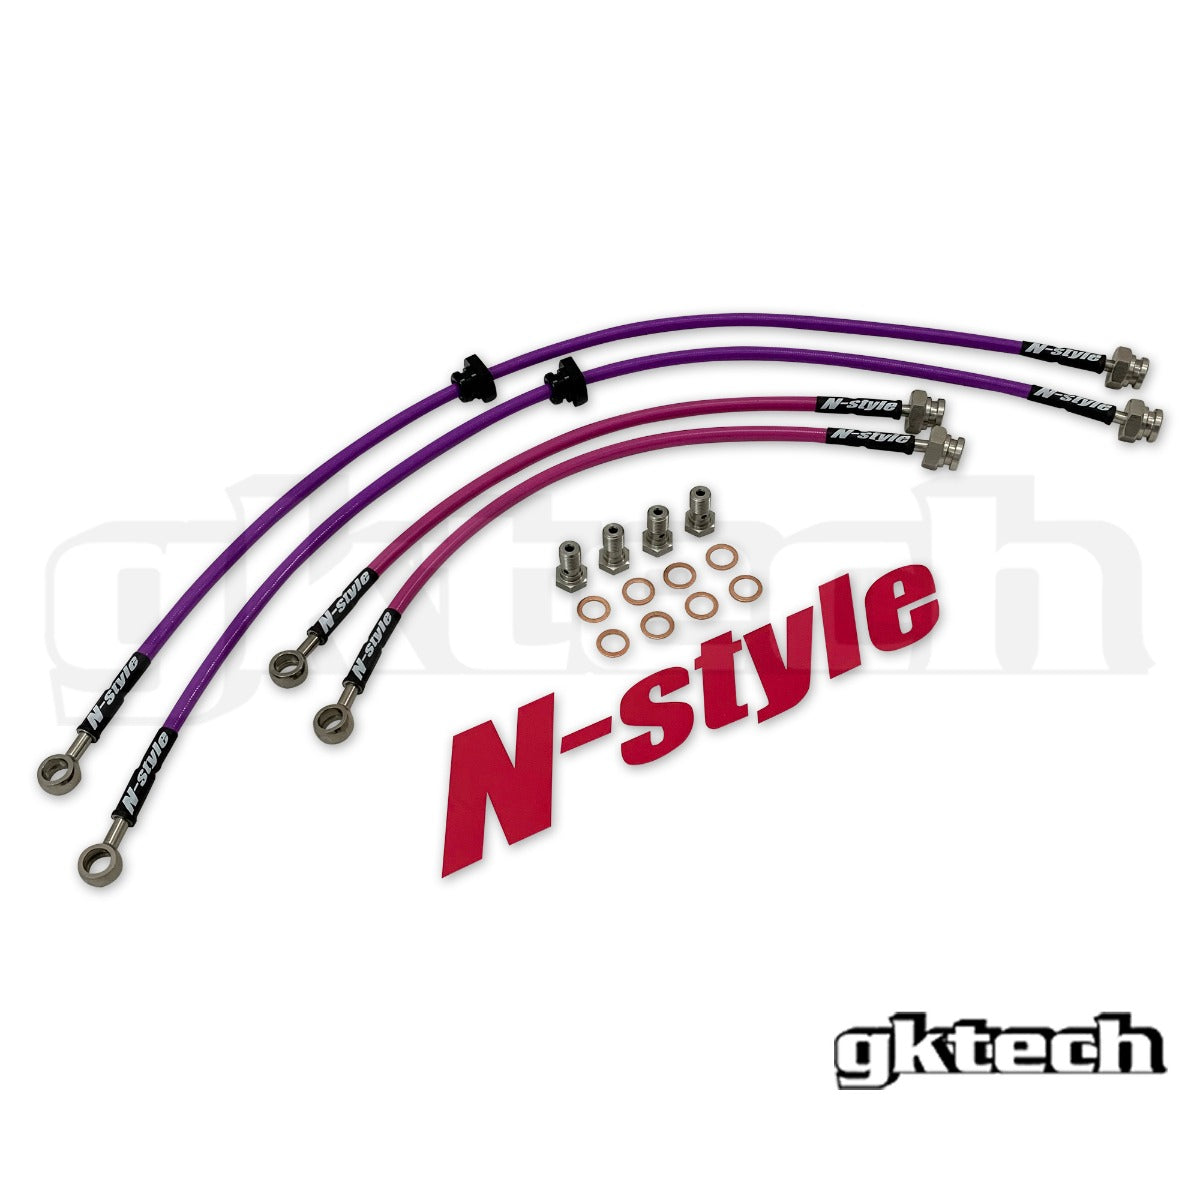 S13/180sx braided brake lines